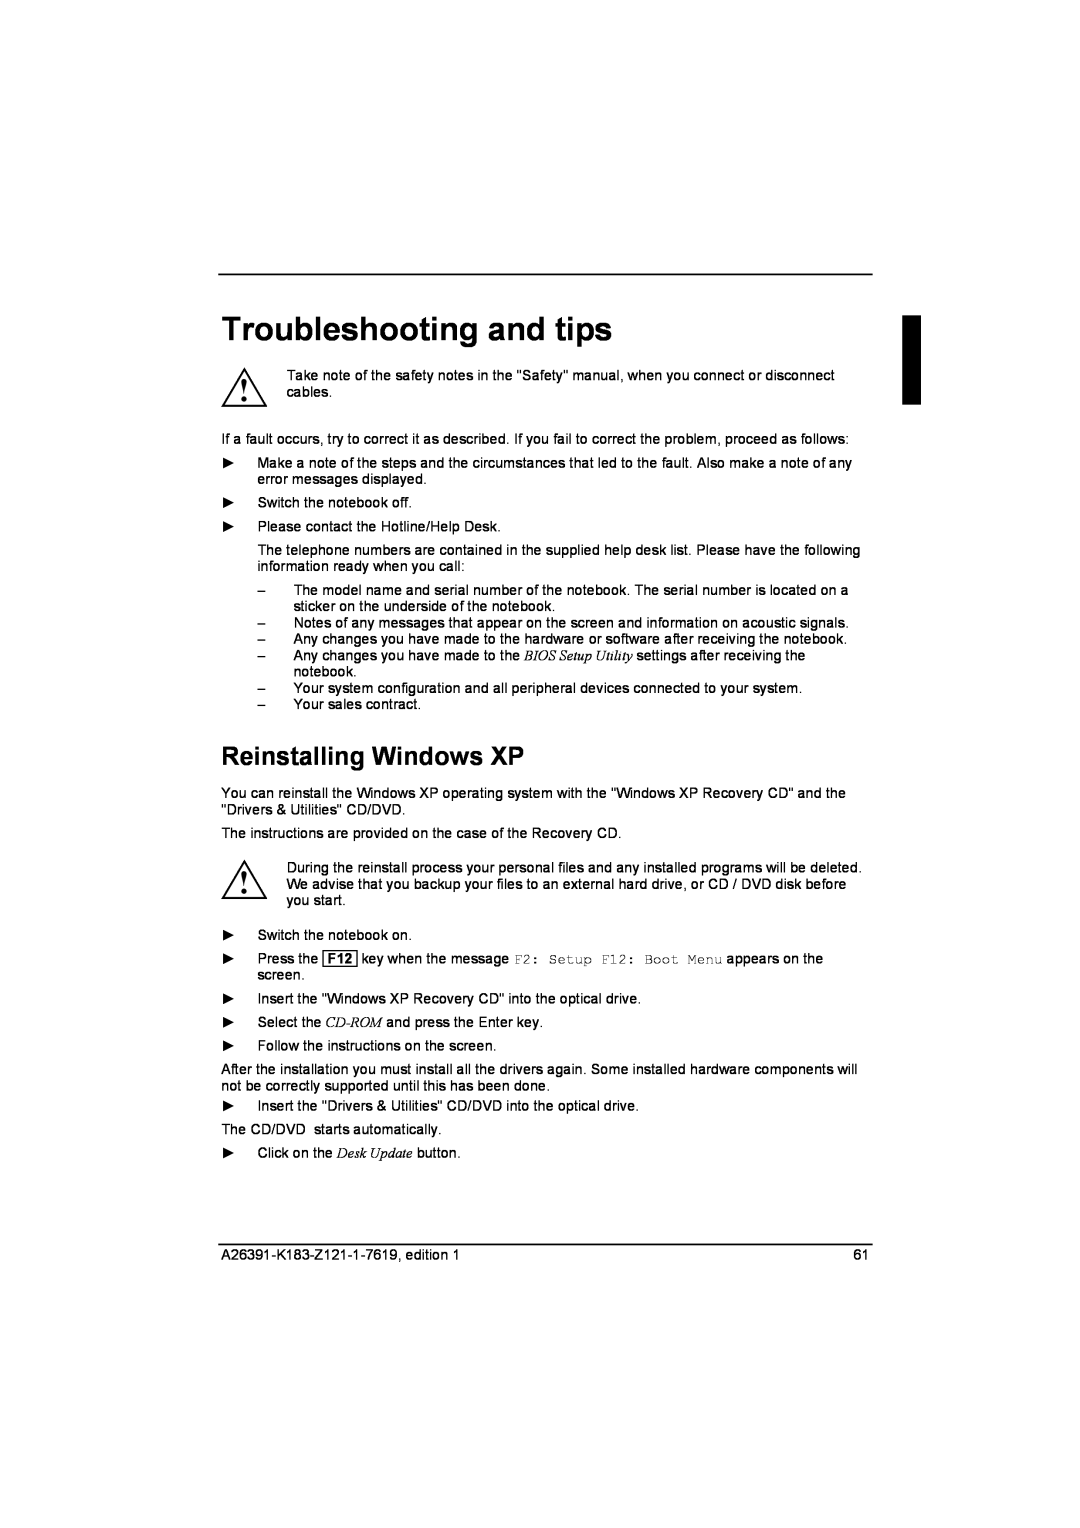 Fujitsu Siemens Computers V2035 manual Troubleshooting and tips, Reinstalling Windows XP 